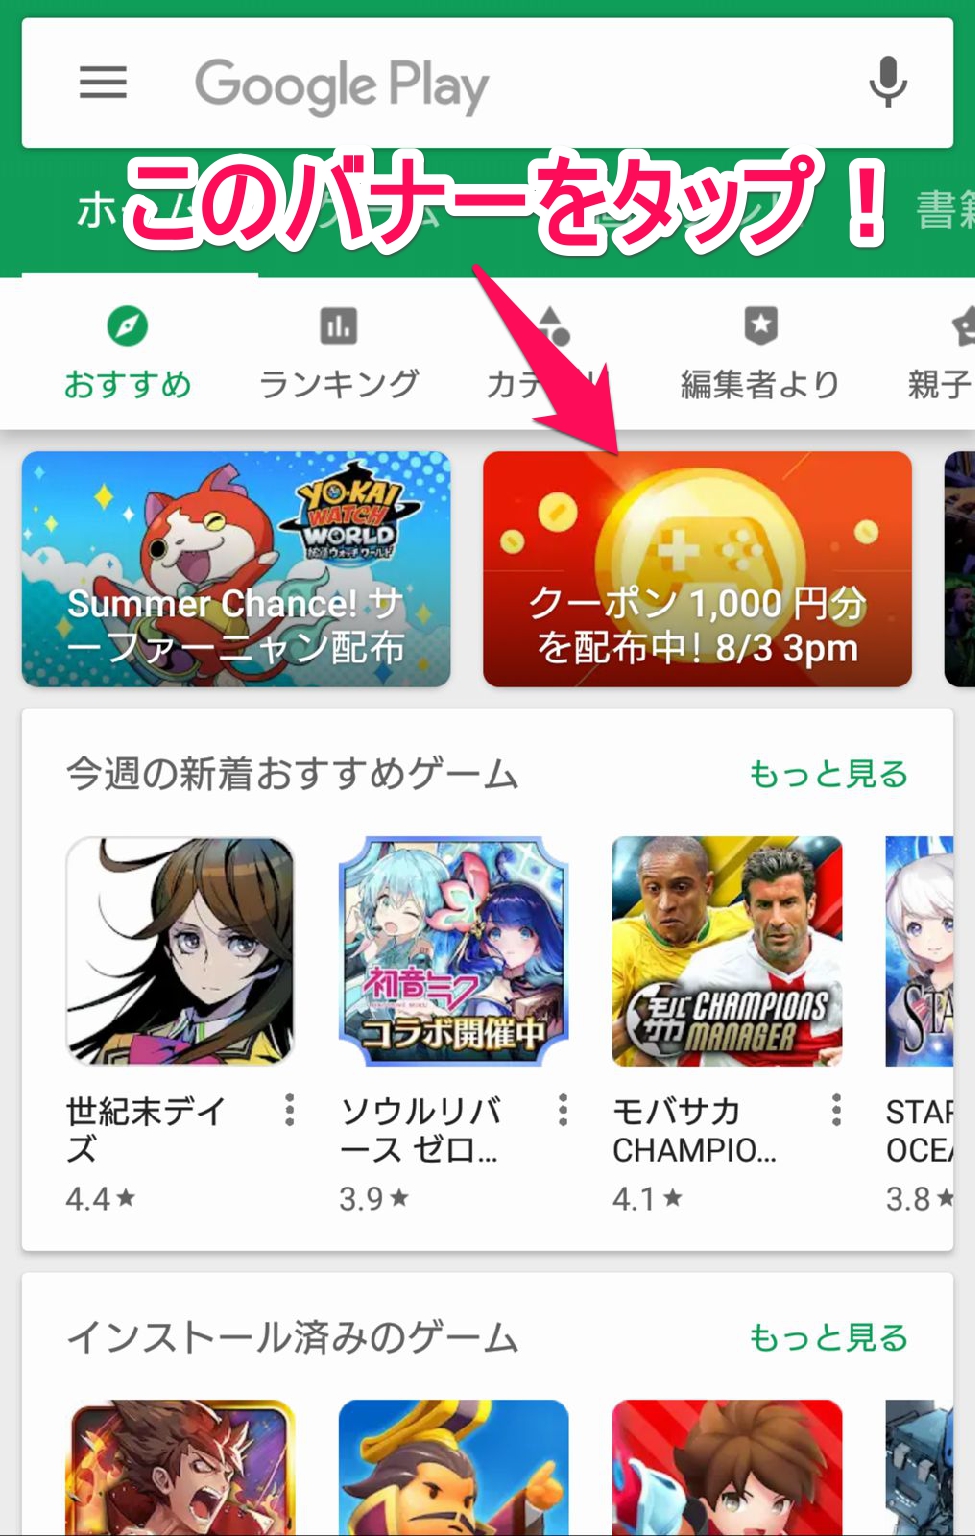 Google Playで1 000円クーポン配布中 9 000円以上のアイテム購入時に使用可能 Appliv Games